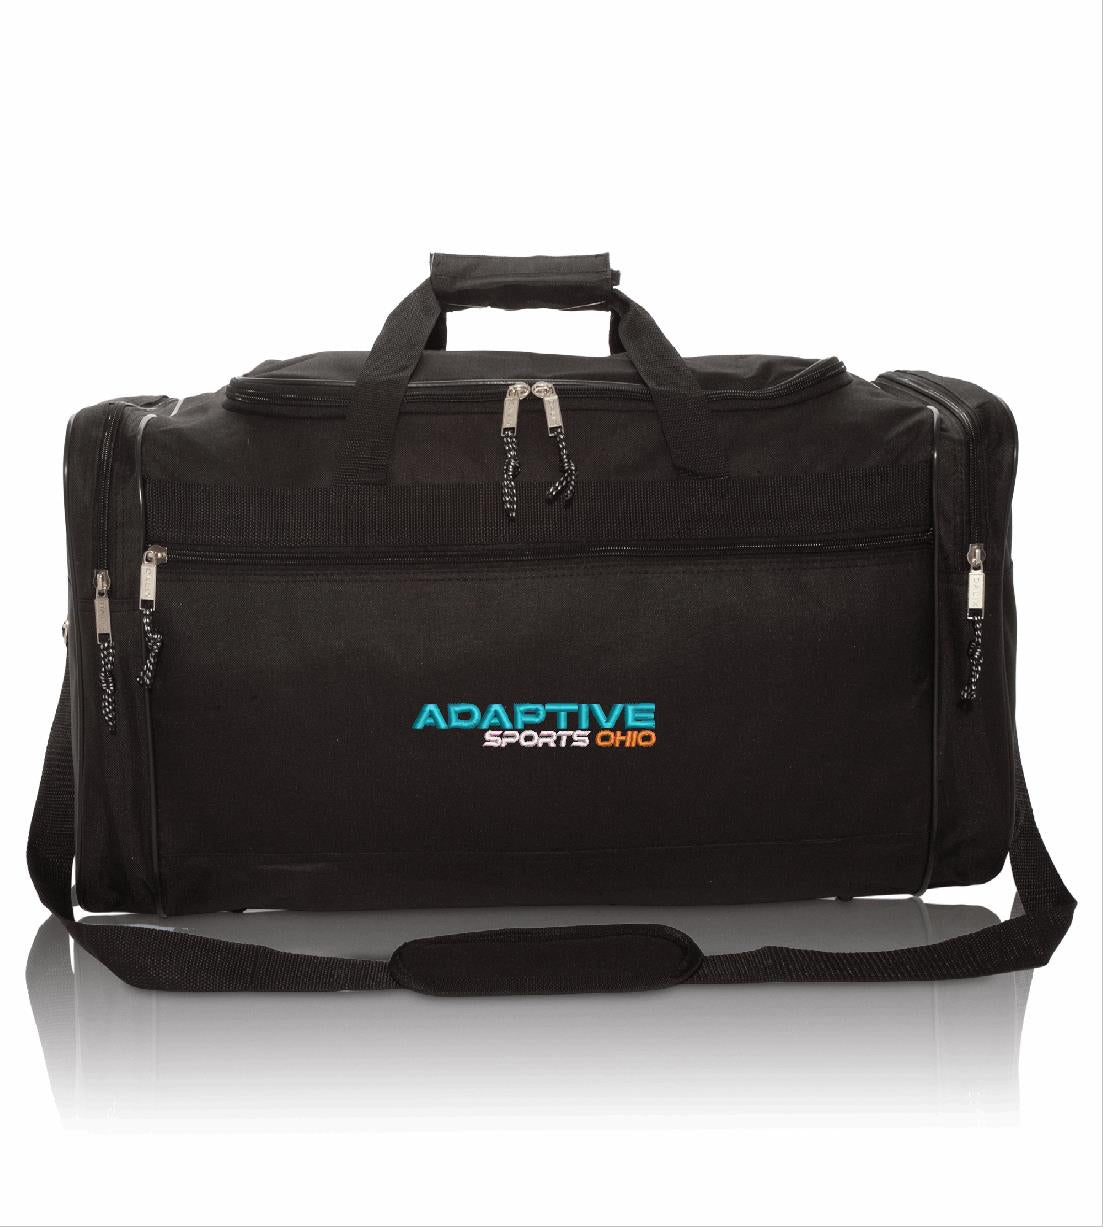 DALIX 25" Adaptive Sports Duffle Bag